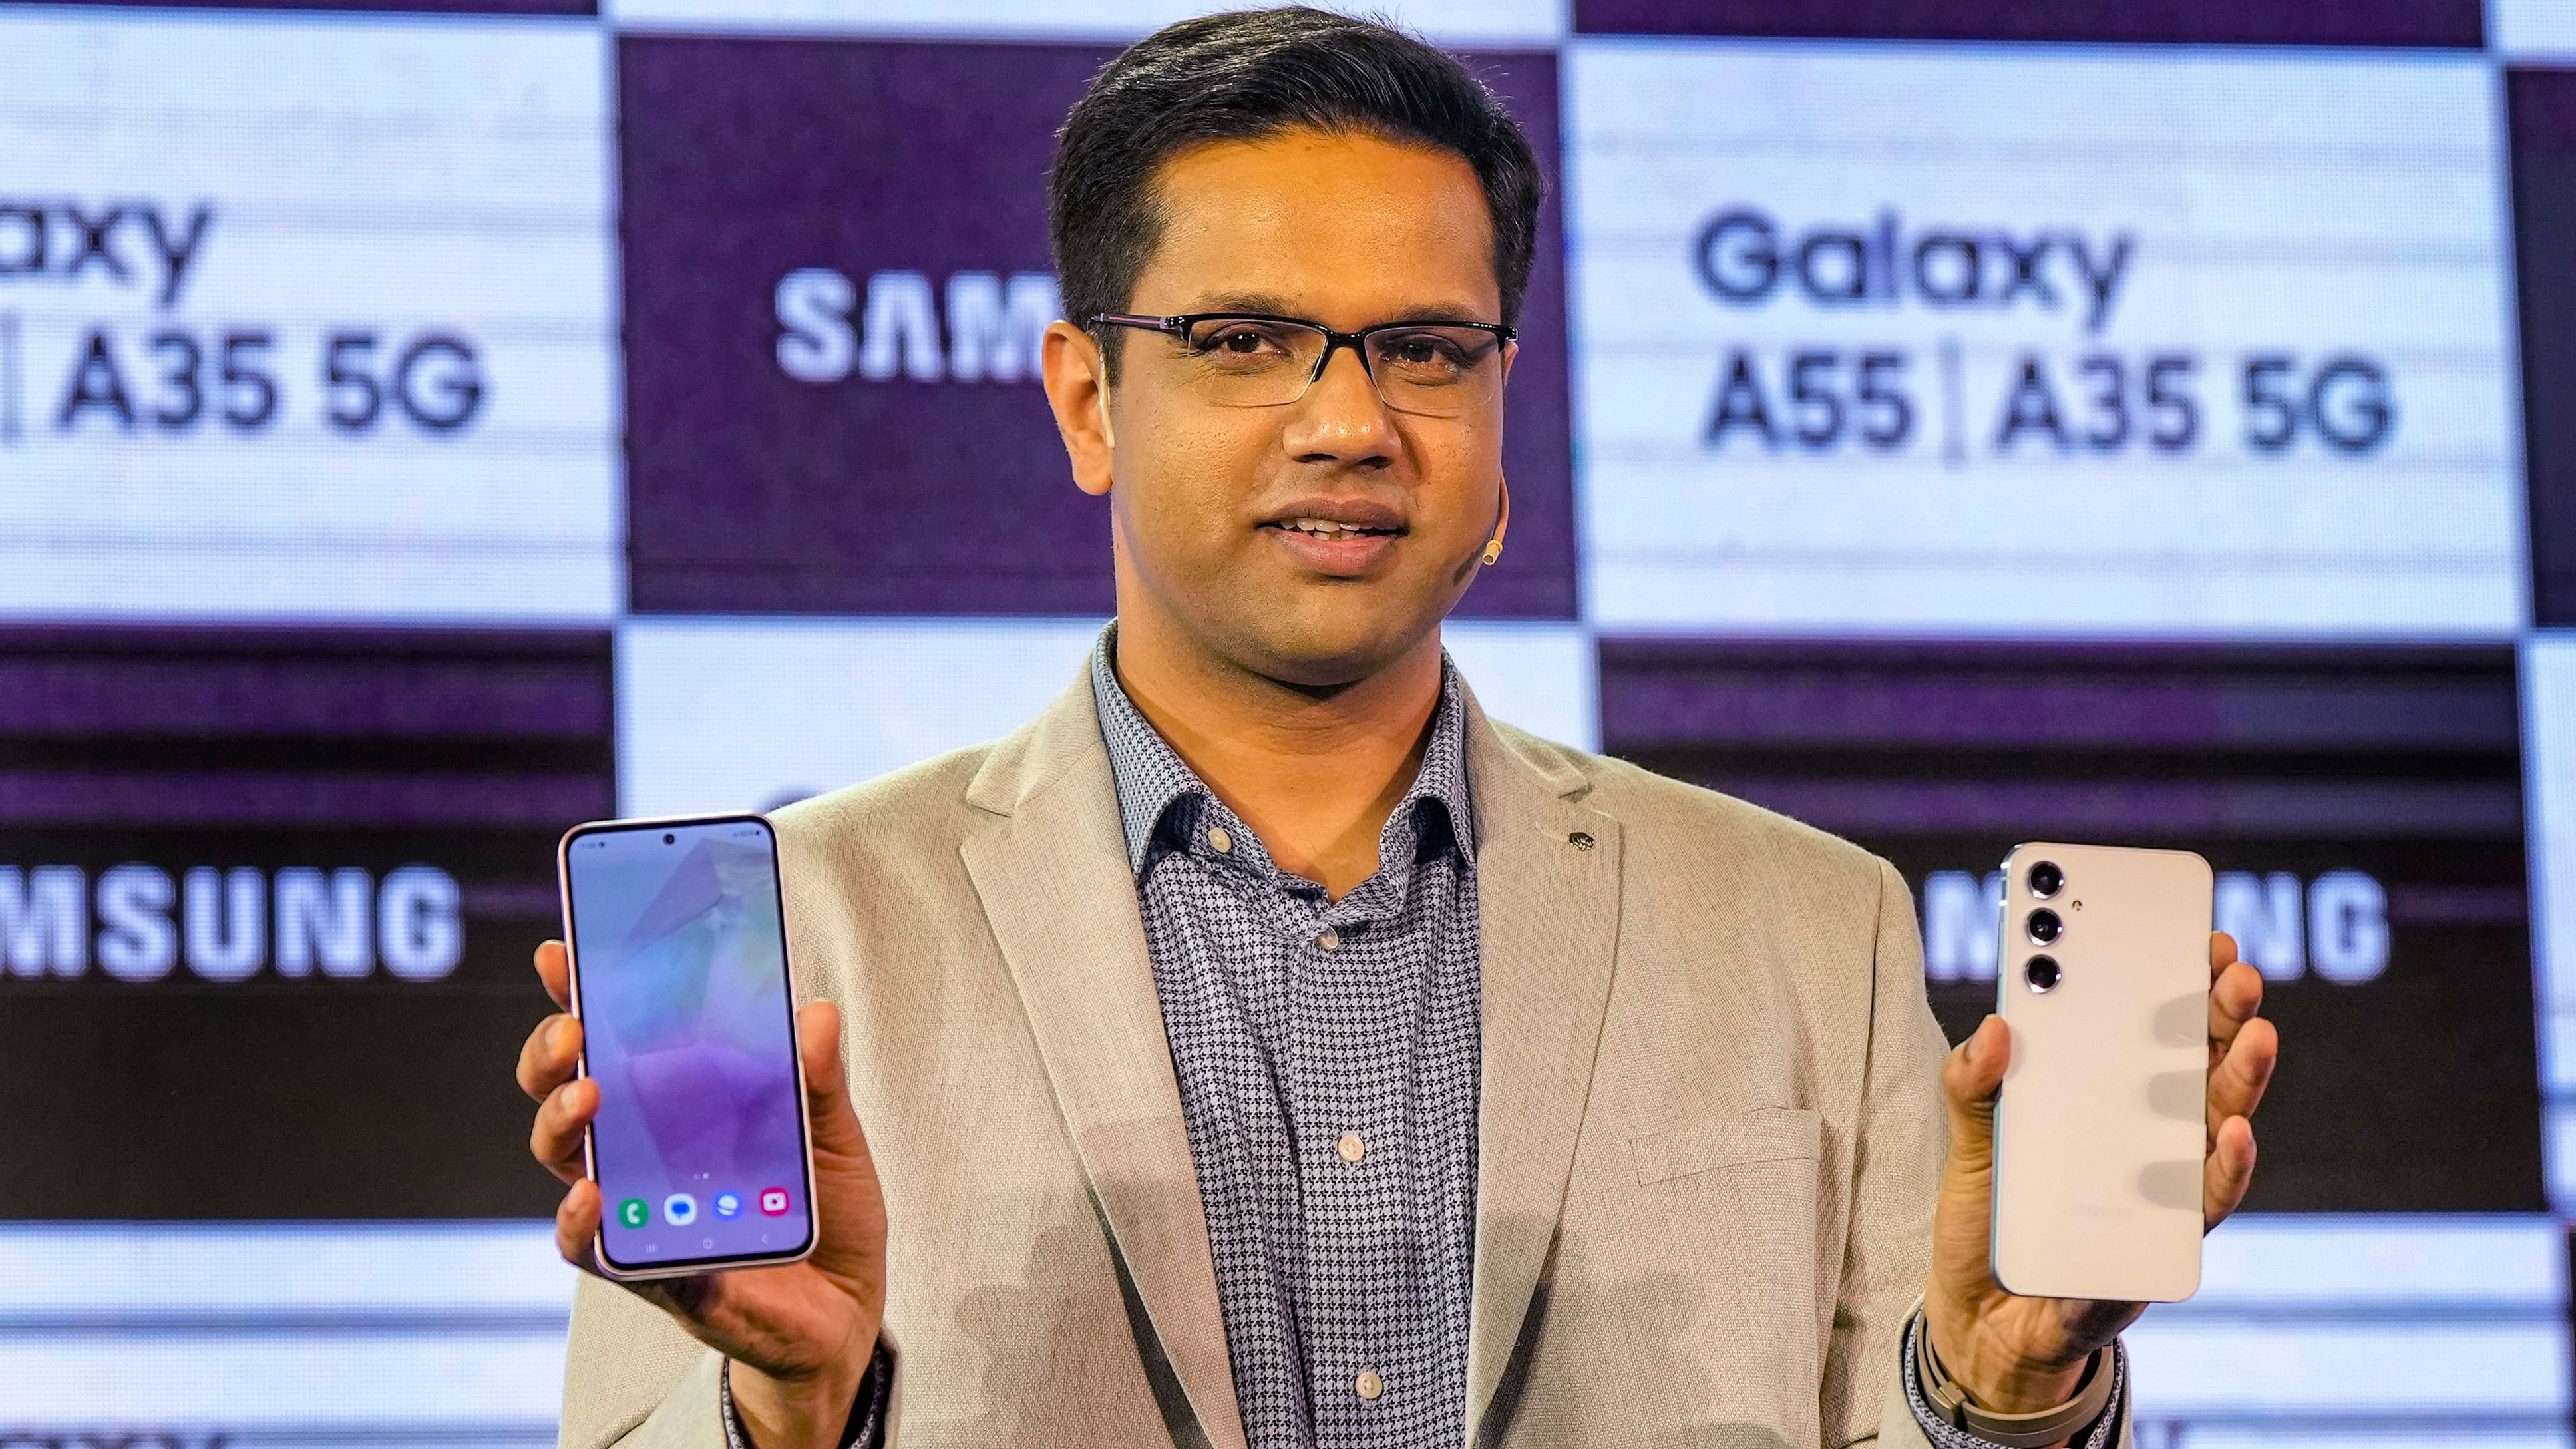 <div class="paragraphs"><p>Samsung India GM Akshay Rao unveils Samsung Galaxy A55 5G and Galaxy A 35 5G smartphones.</p></div>